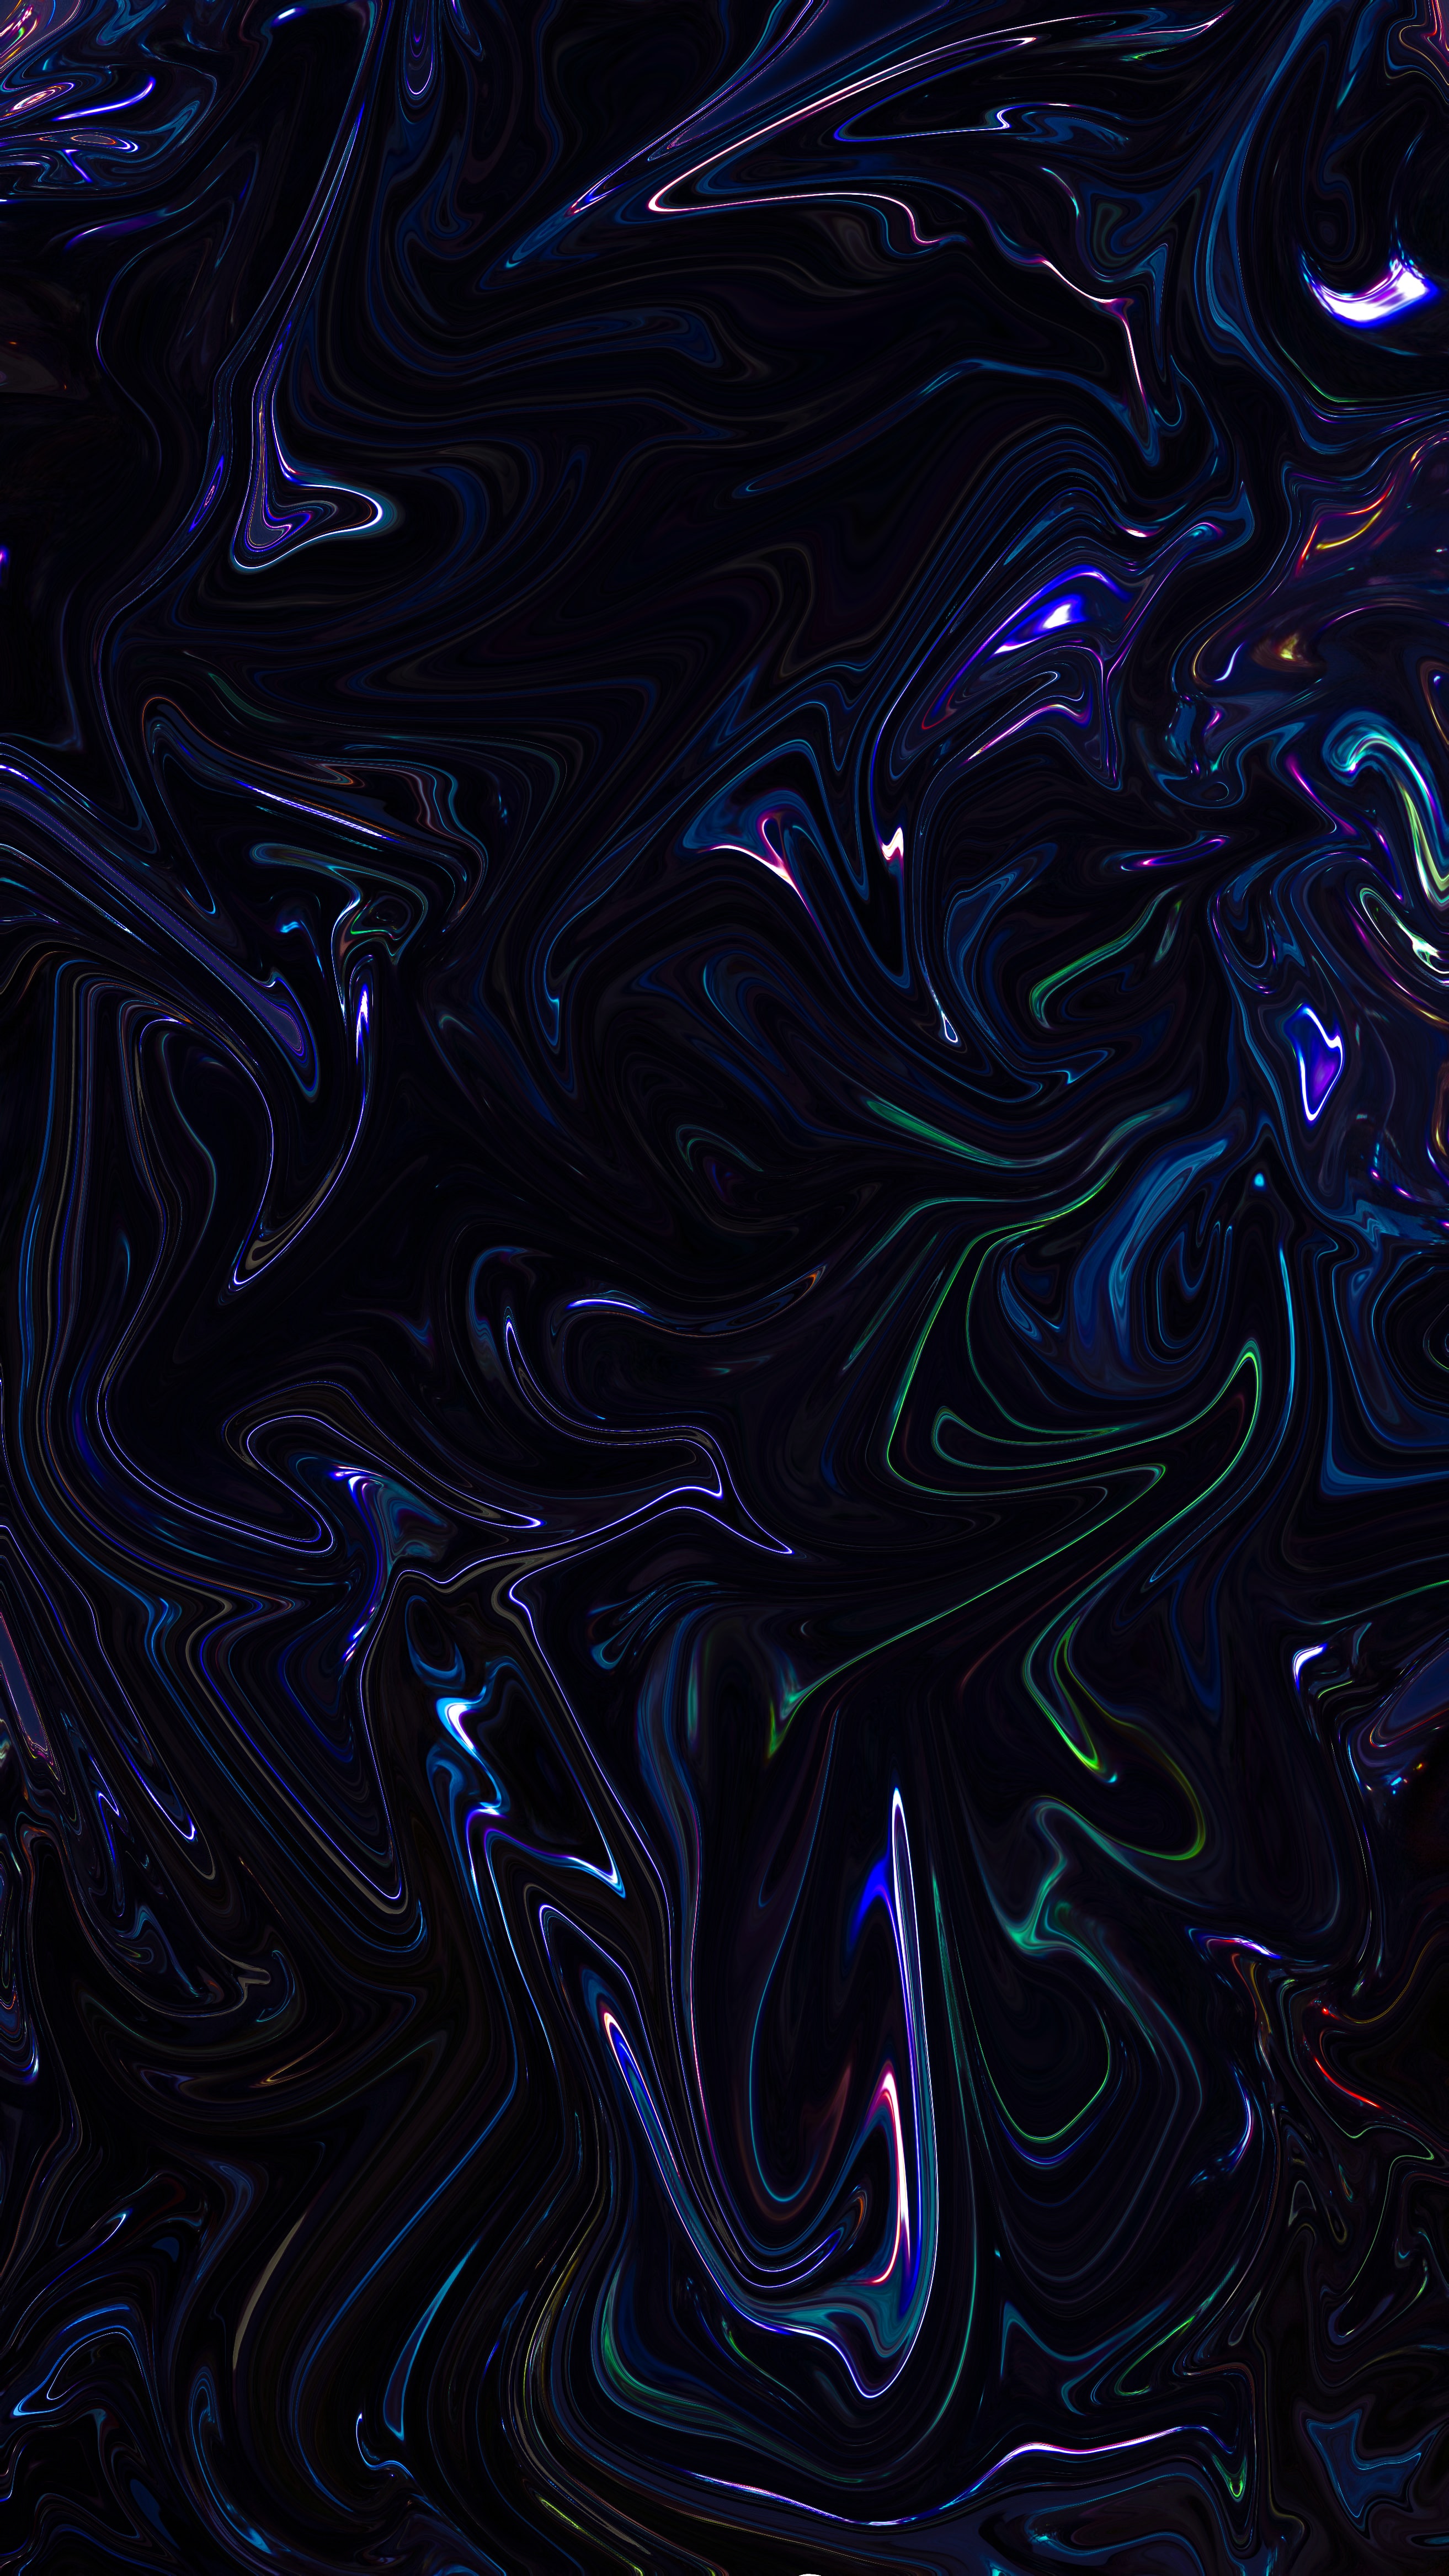 viscous, wavy, abstract HD Wallpaper for Phone